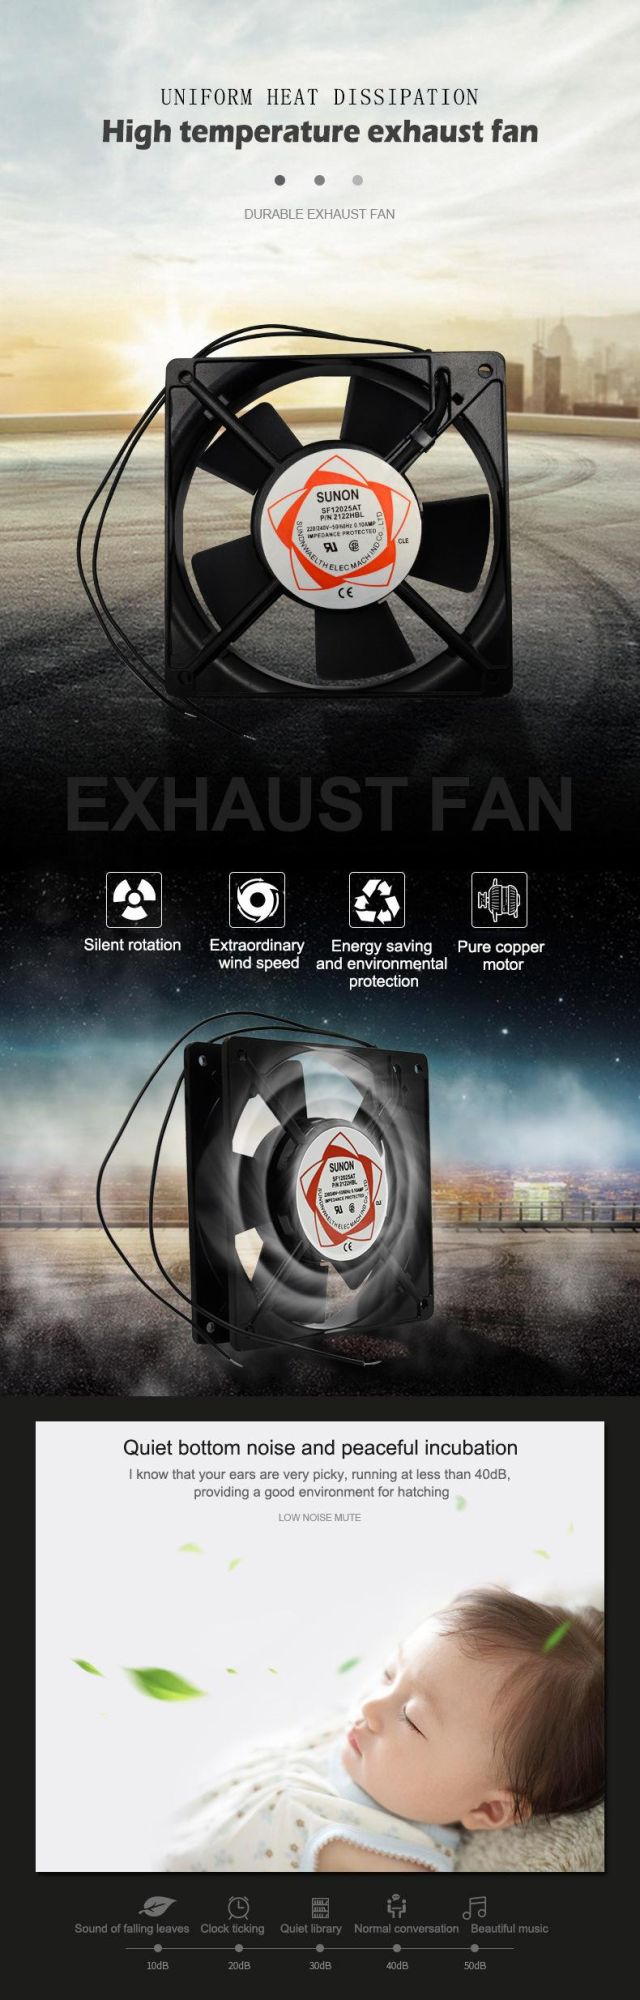 Spare Parts of Mini Egg Incubator /Mini Egg Incubator Fans Fan 0.25A + 120mm AC Cooling Fan for Incubator